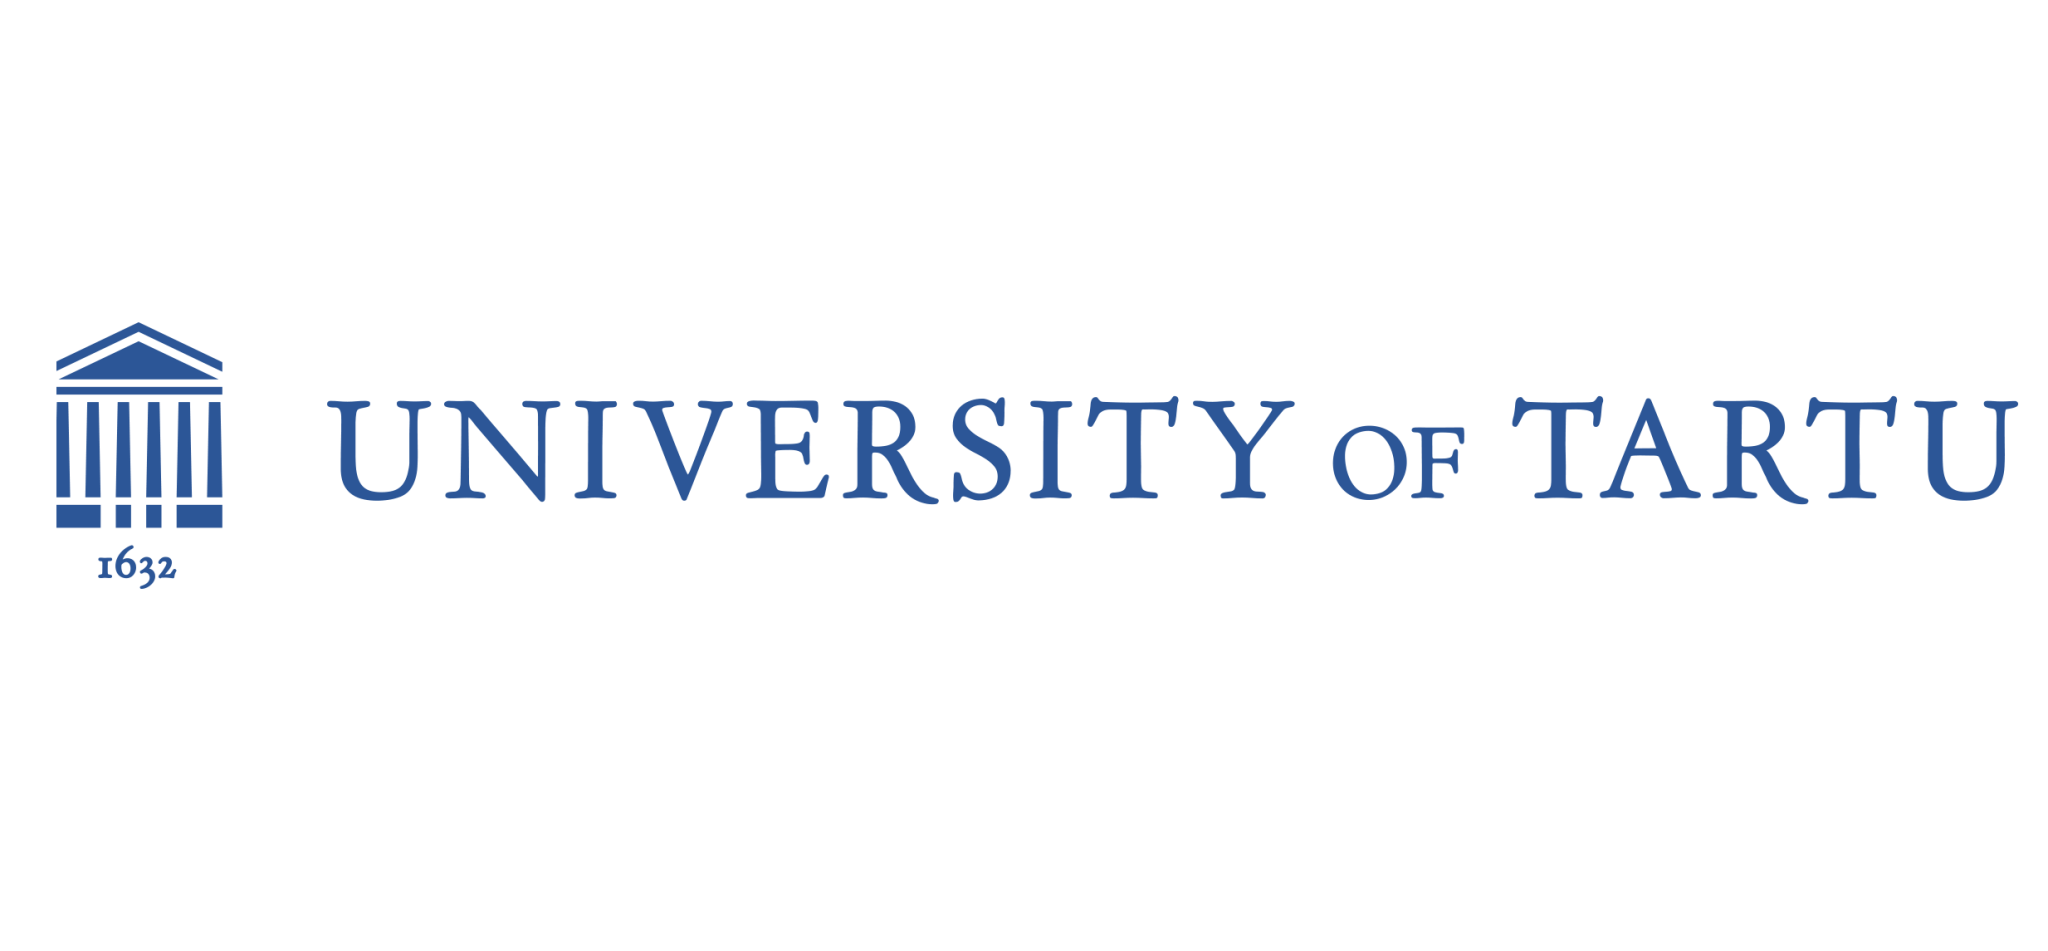 University of Tartu logo.